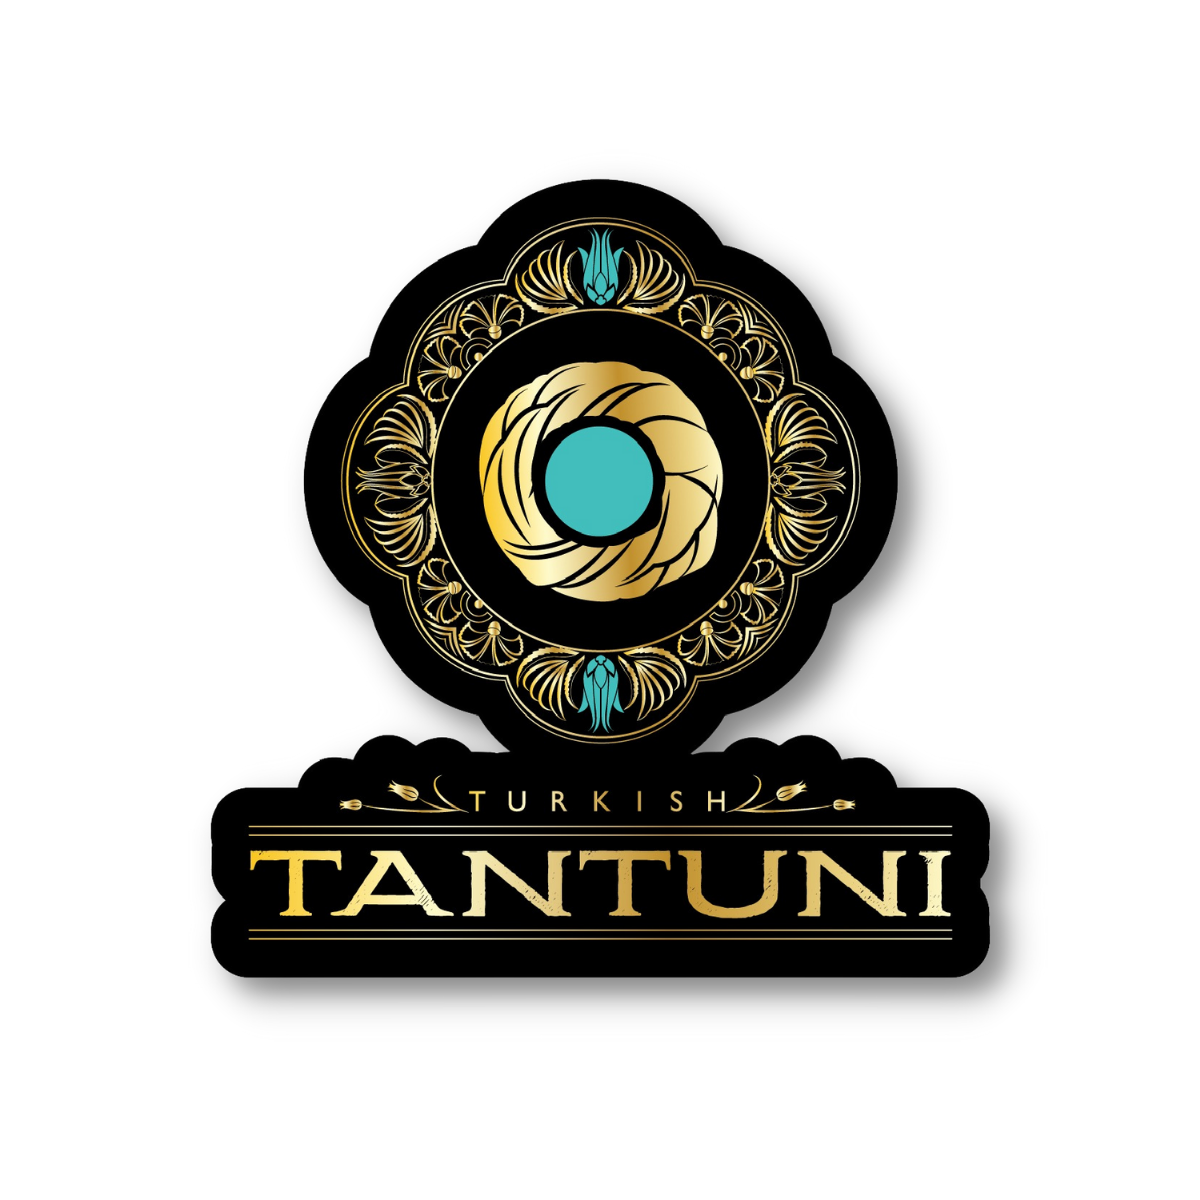 TURKISH TANTUNI